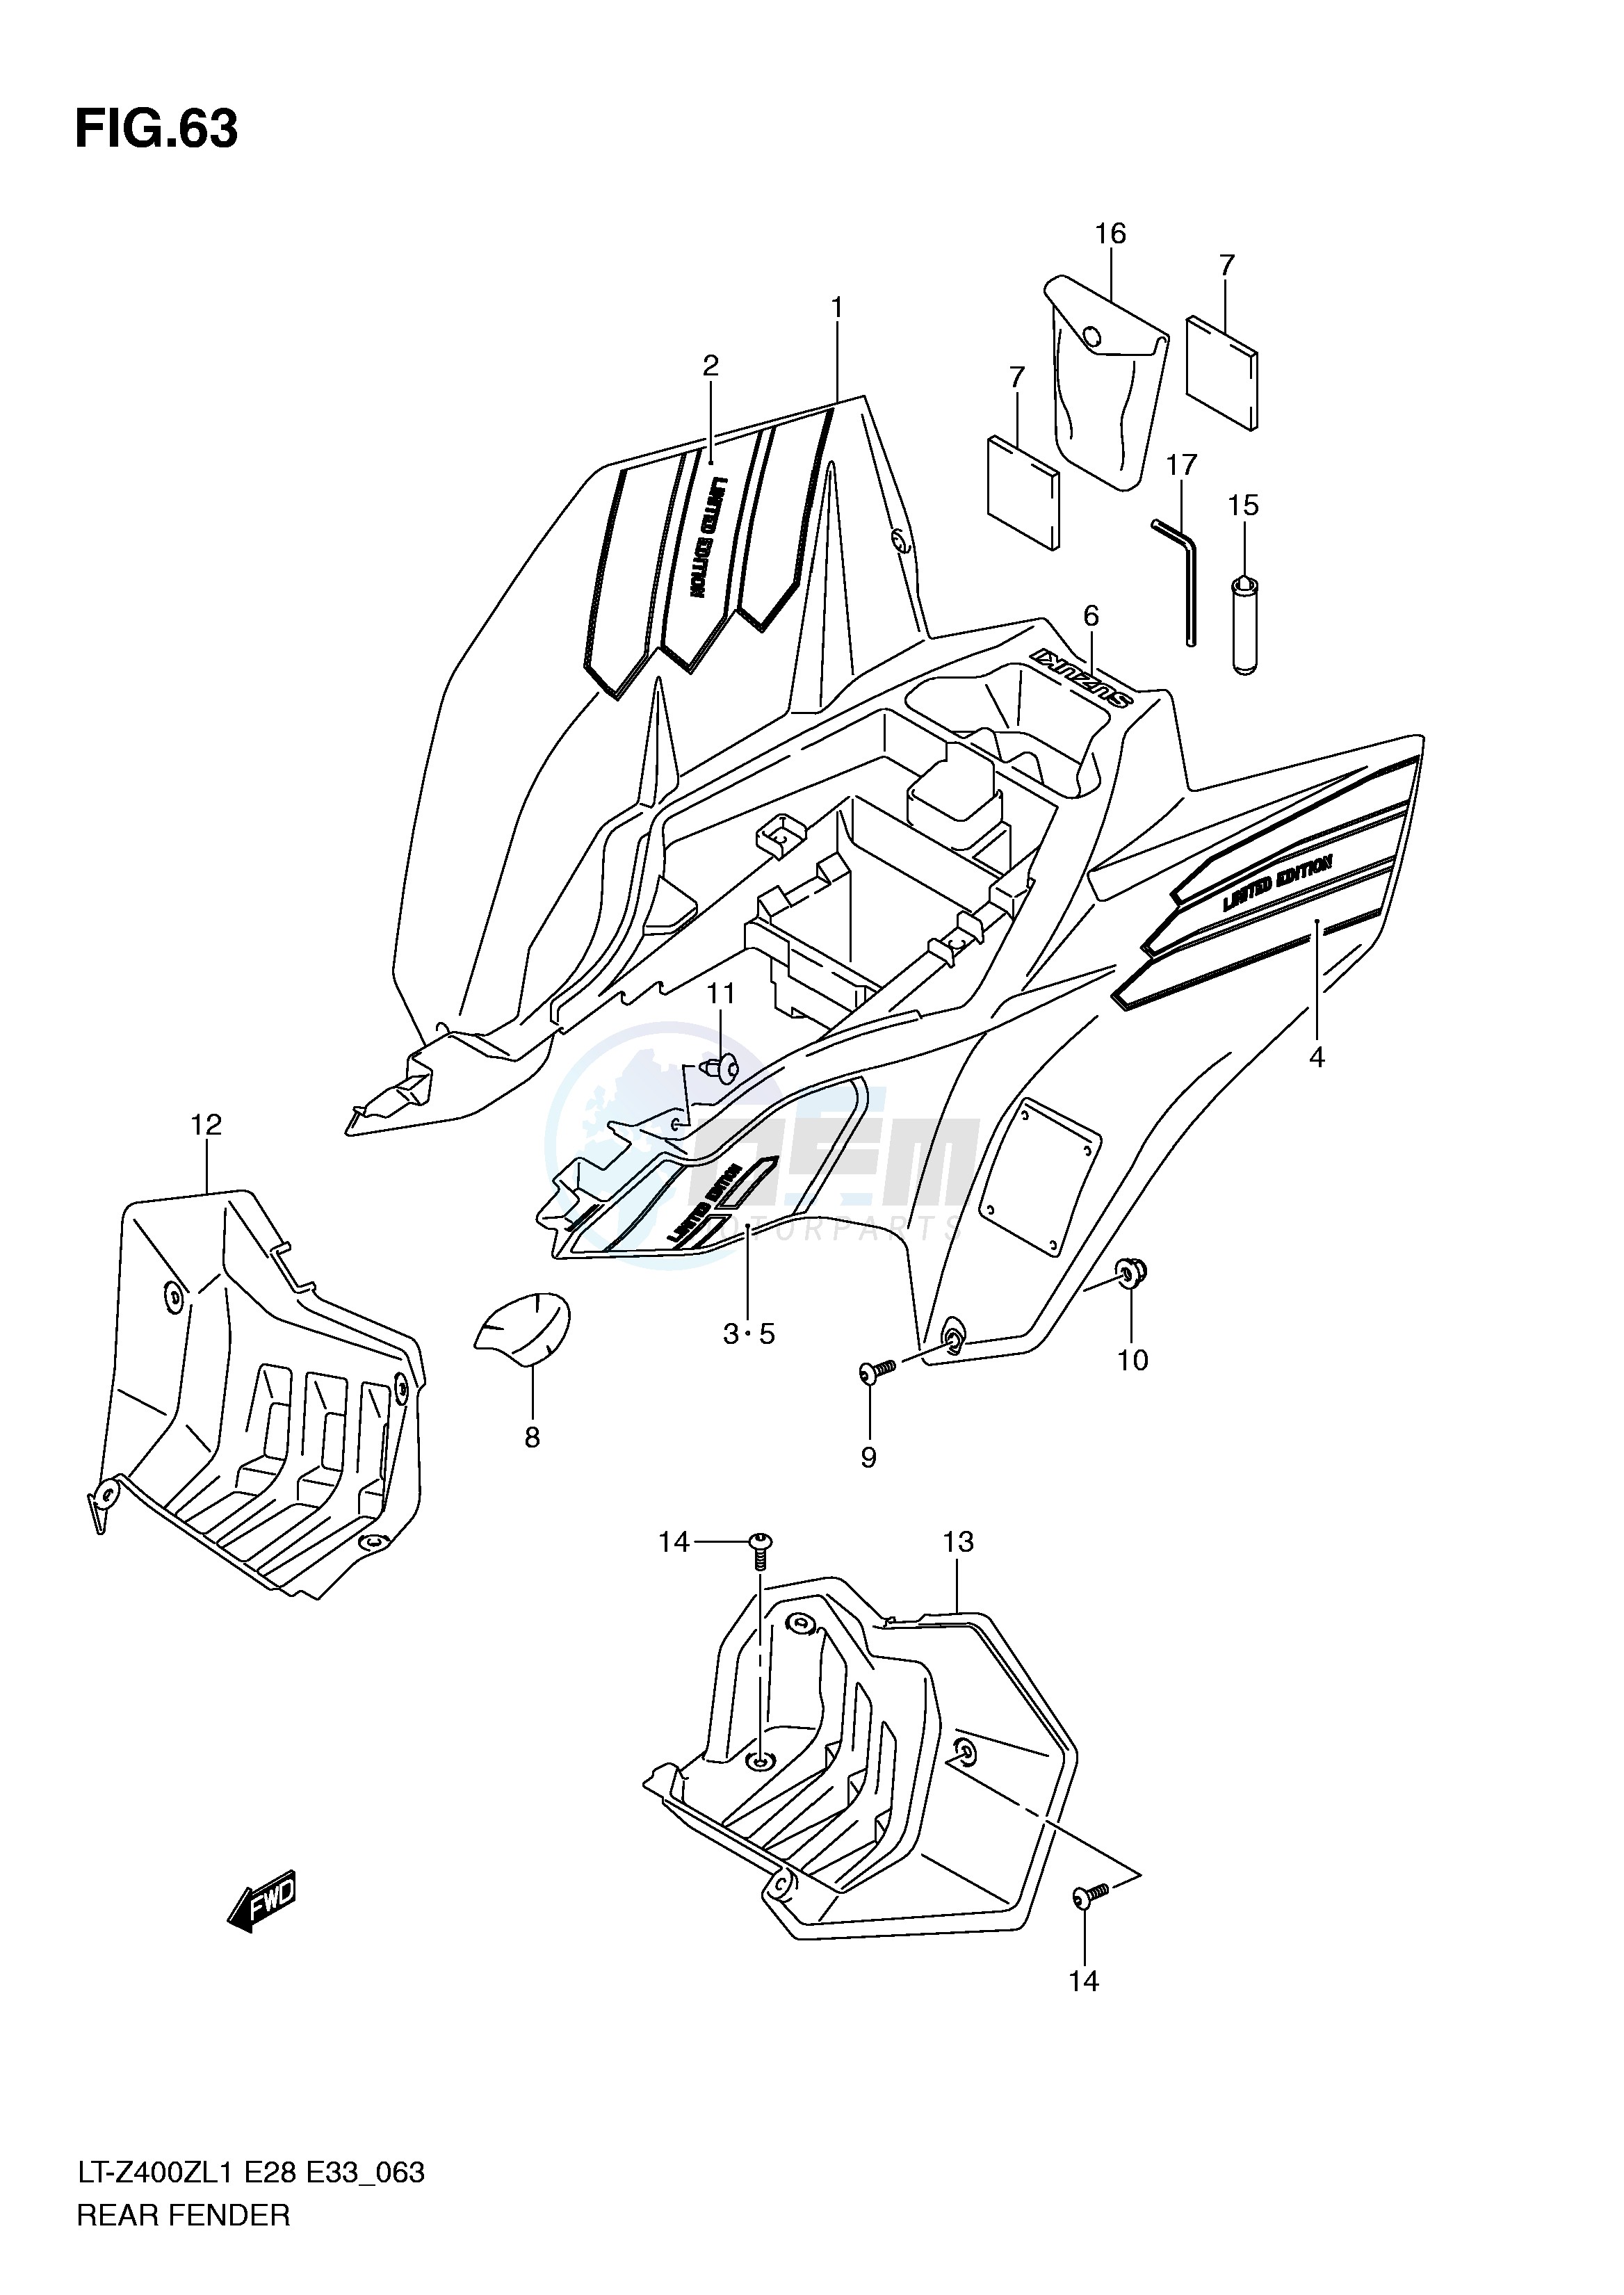 REAR FENDER (LT-Z400ZL1 E33) blueprint